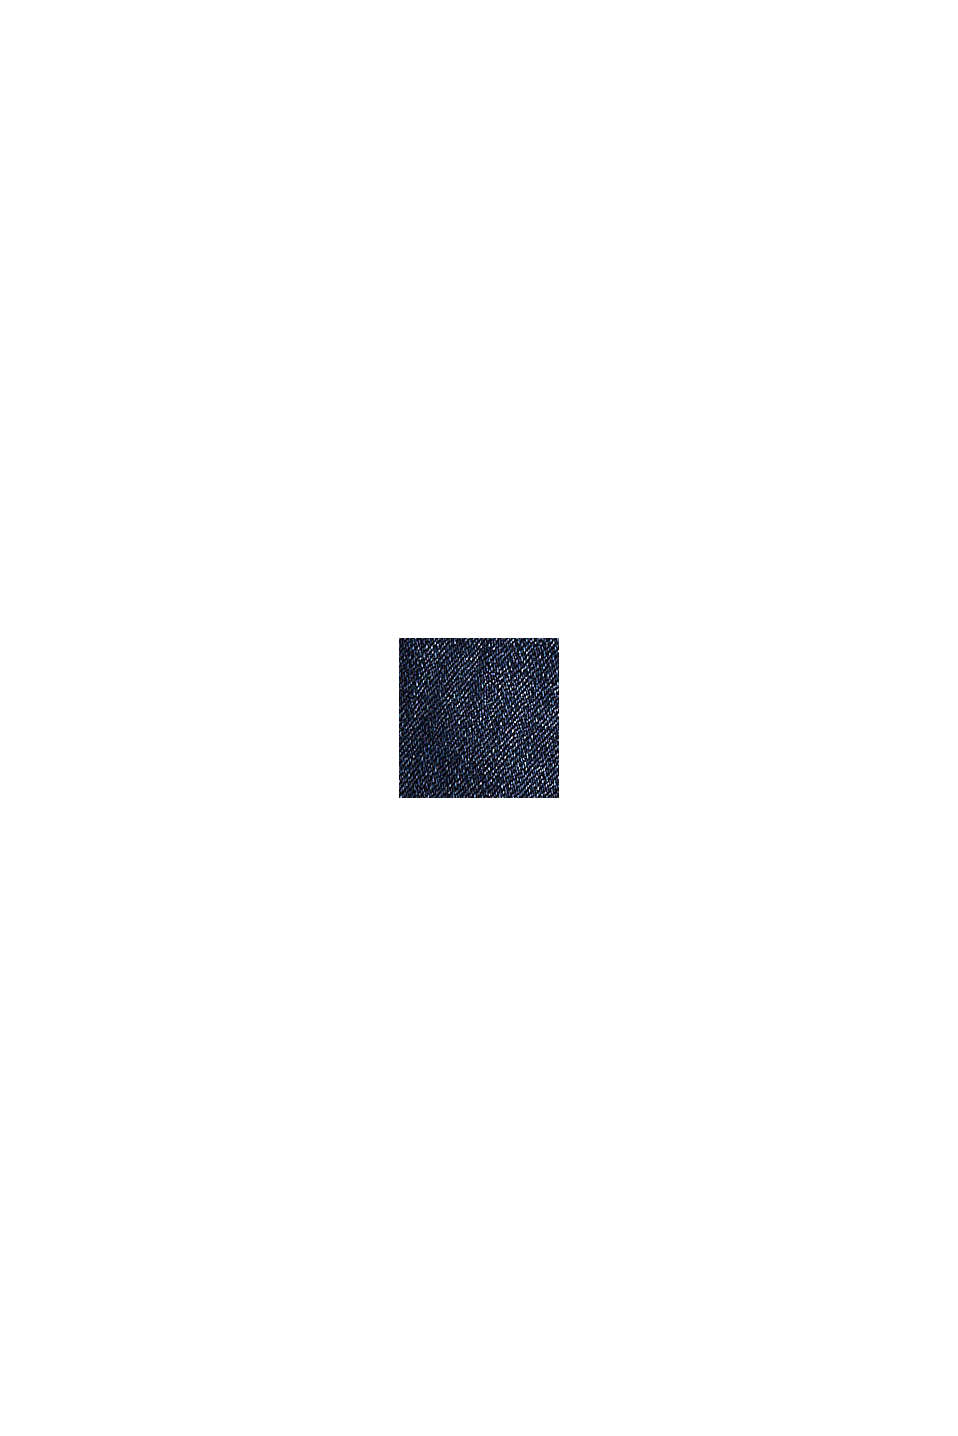 Jeans stretch in misto cotone biologico, BLUE BLACK, swatch